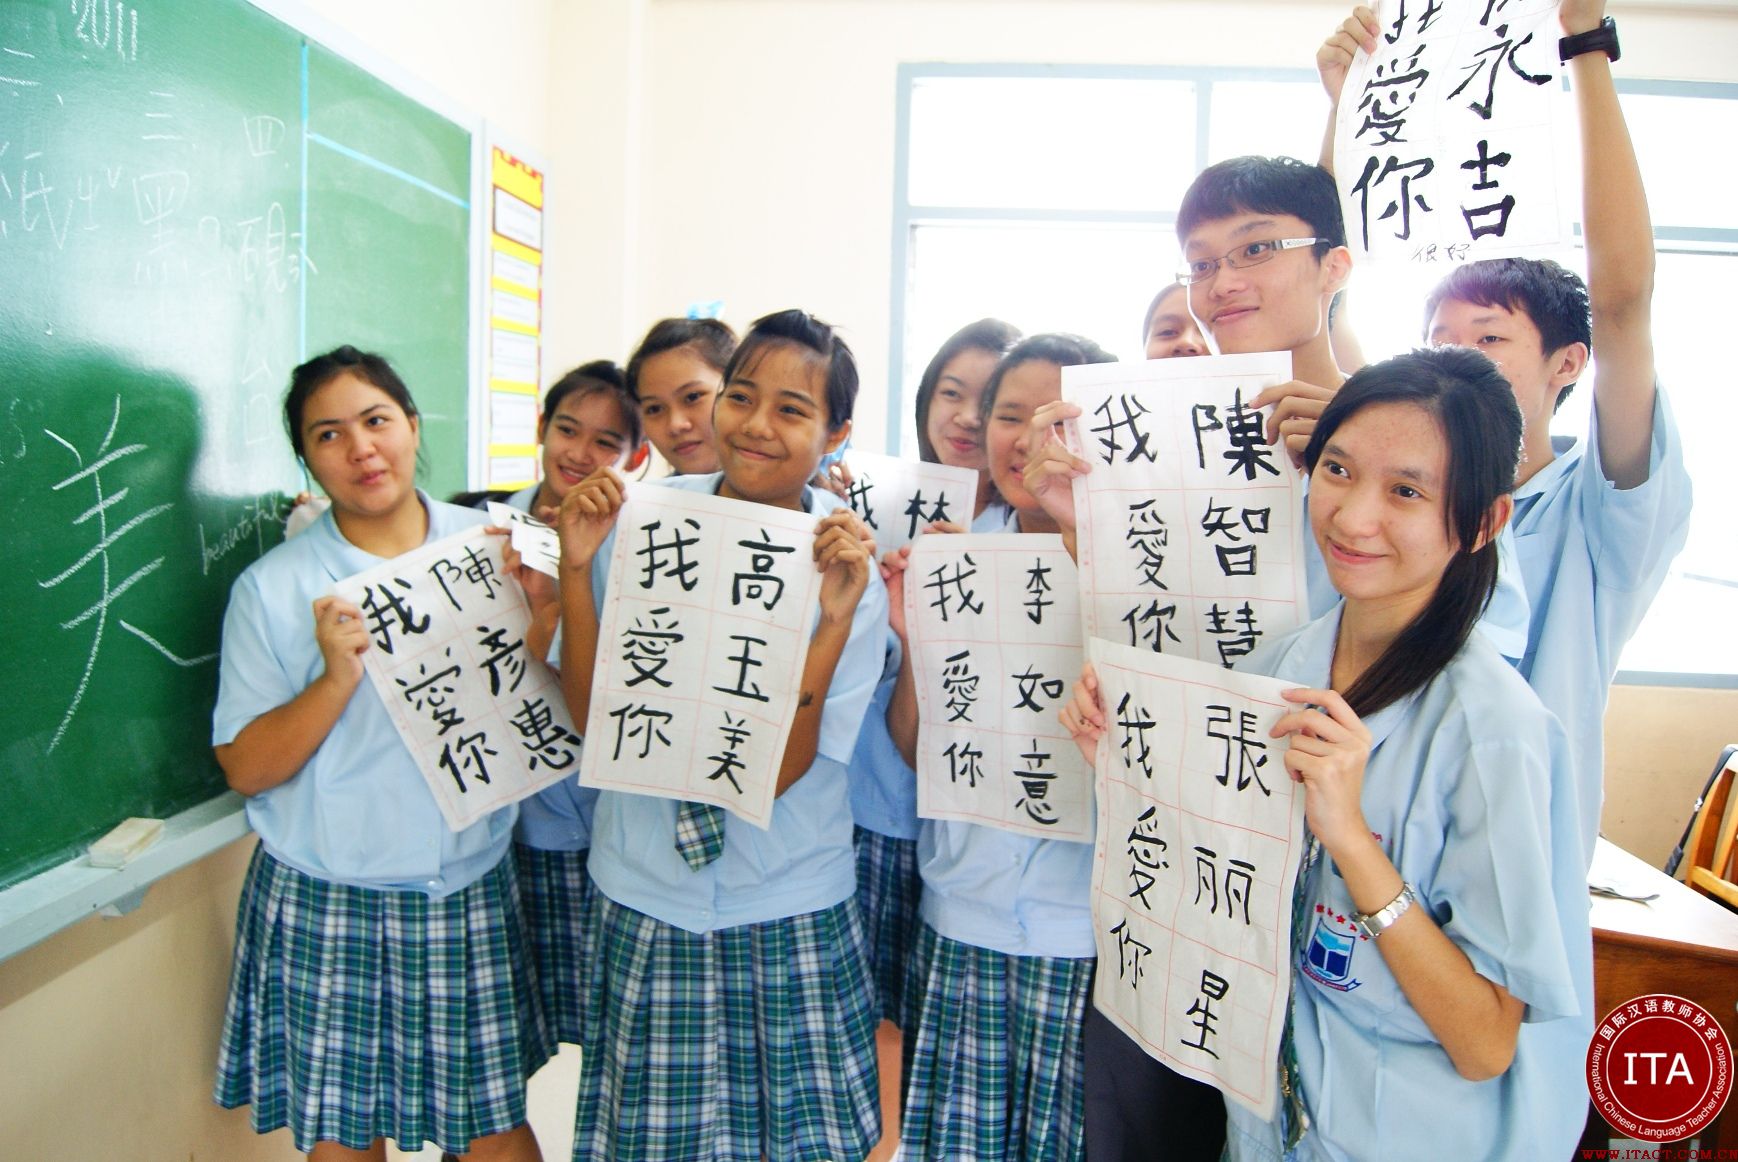 ITA国际汉语教师协会河南考务中心选拔2名对外汉语教师赴泰国任教